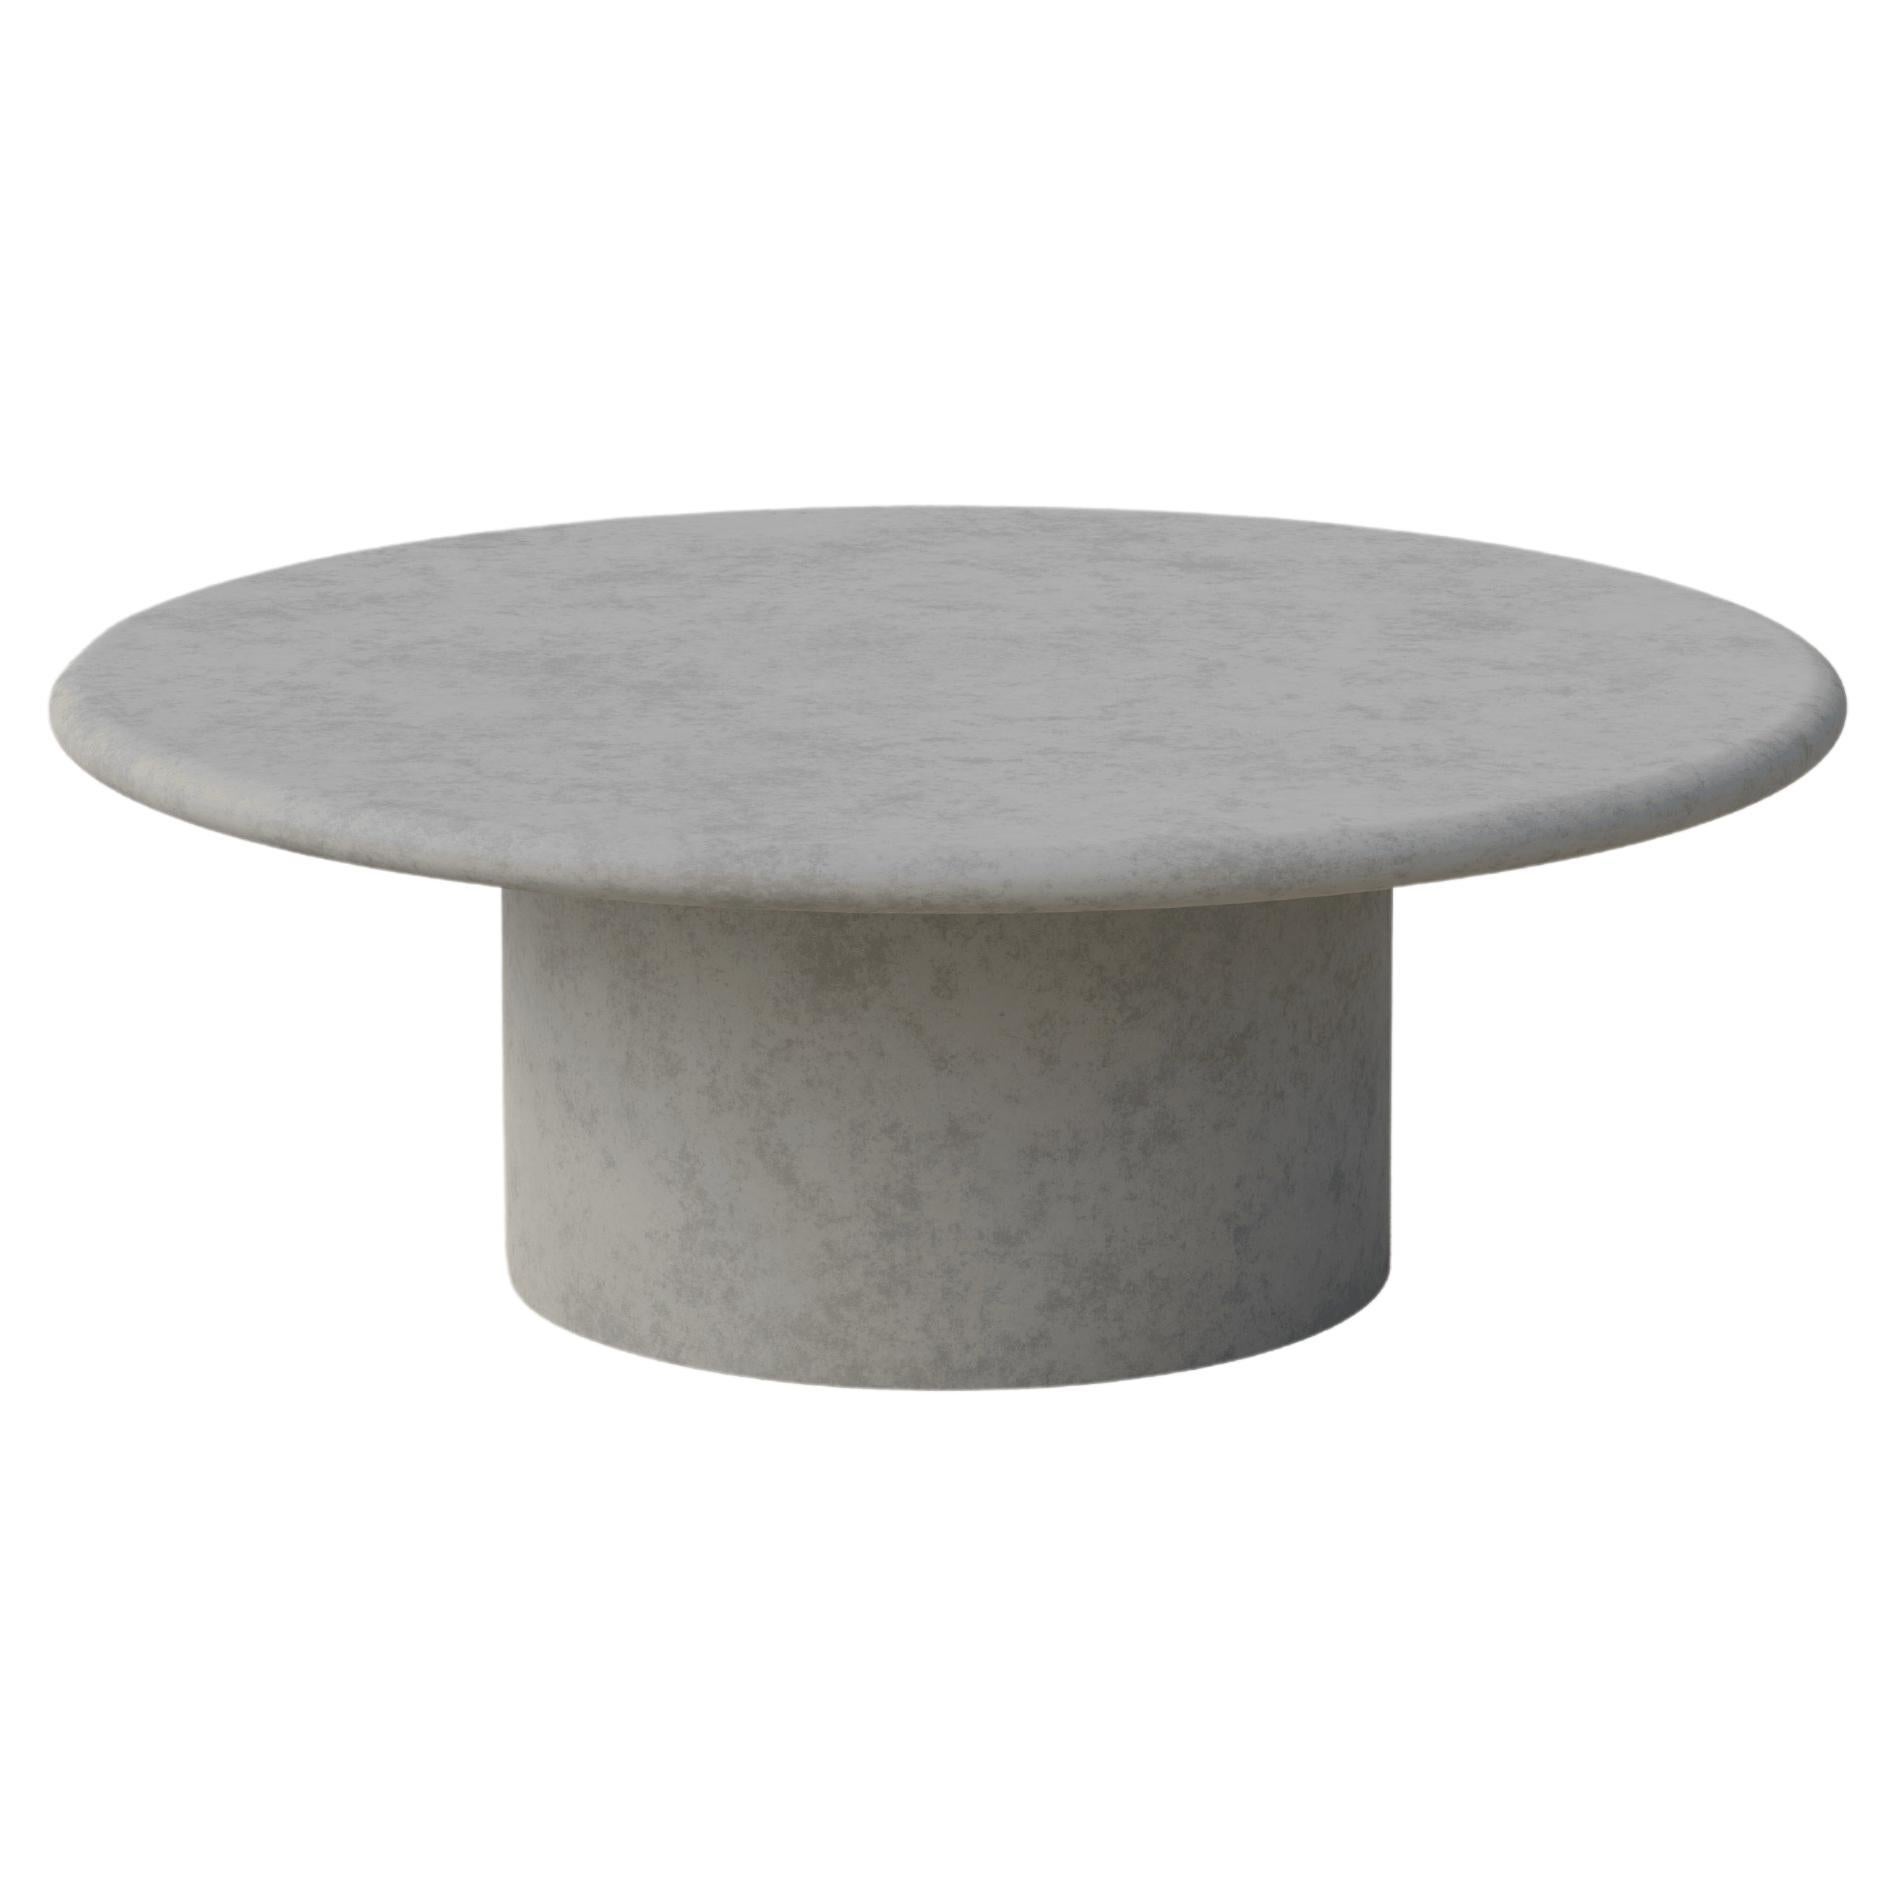 Raindrop Coffee Table, 800, Microcrete / Pebble Grey For Sale